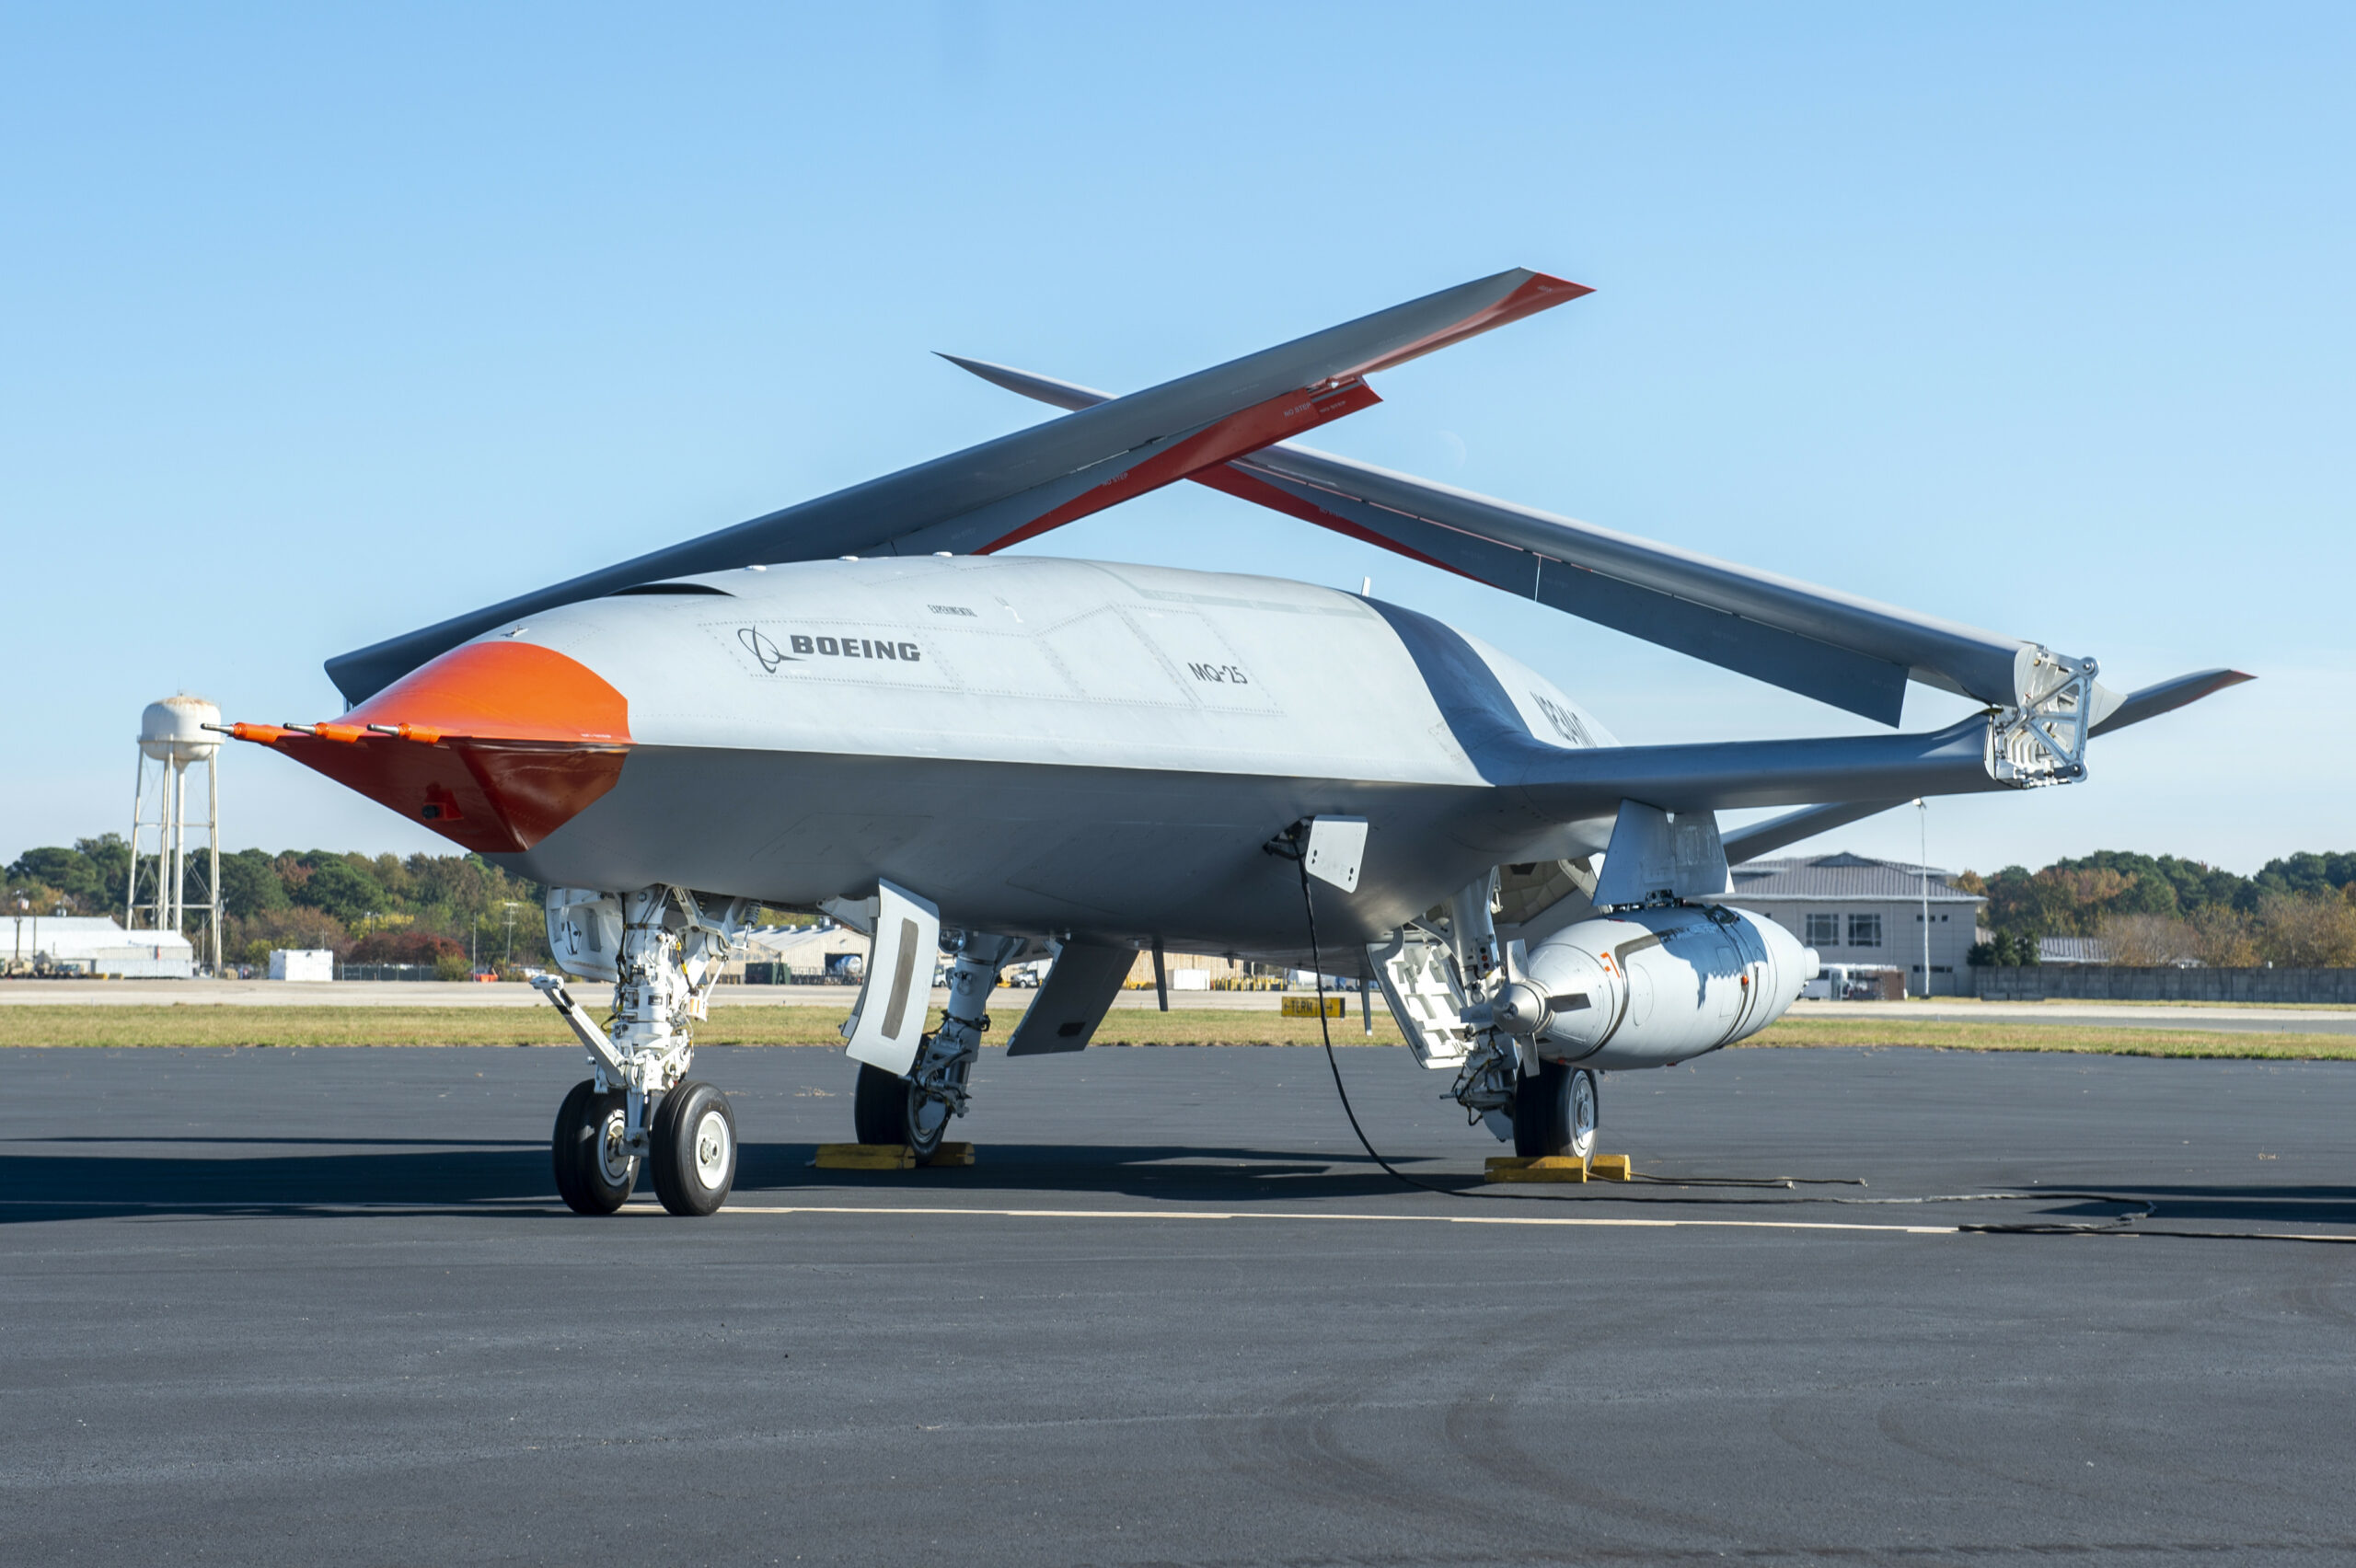 Stingray aerial refuelling drone